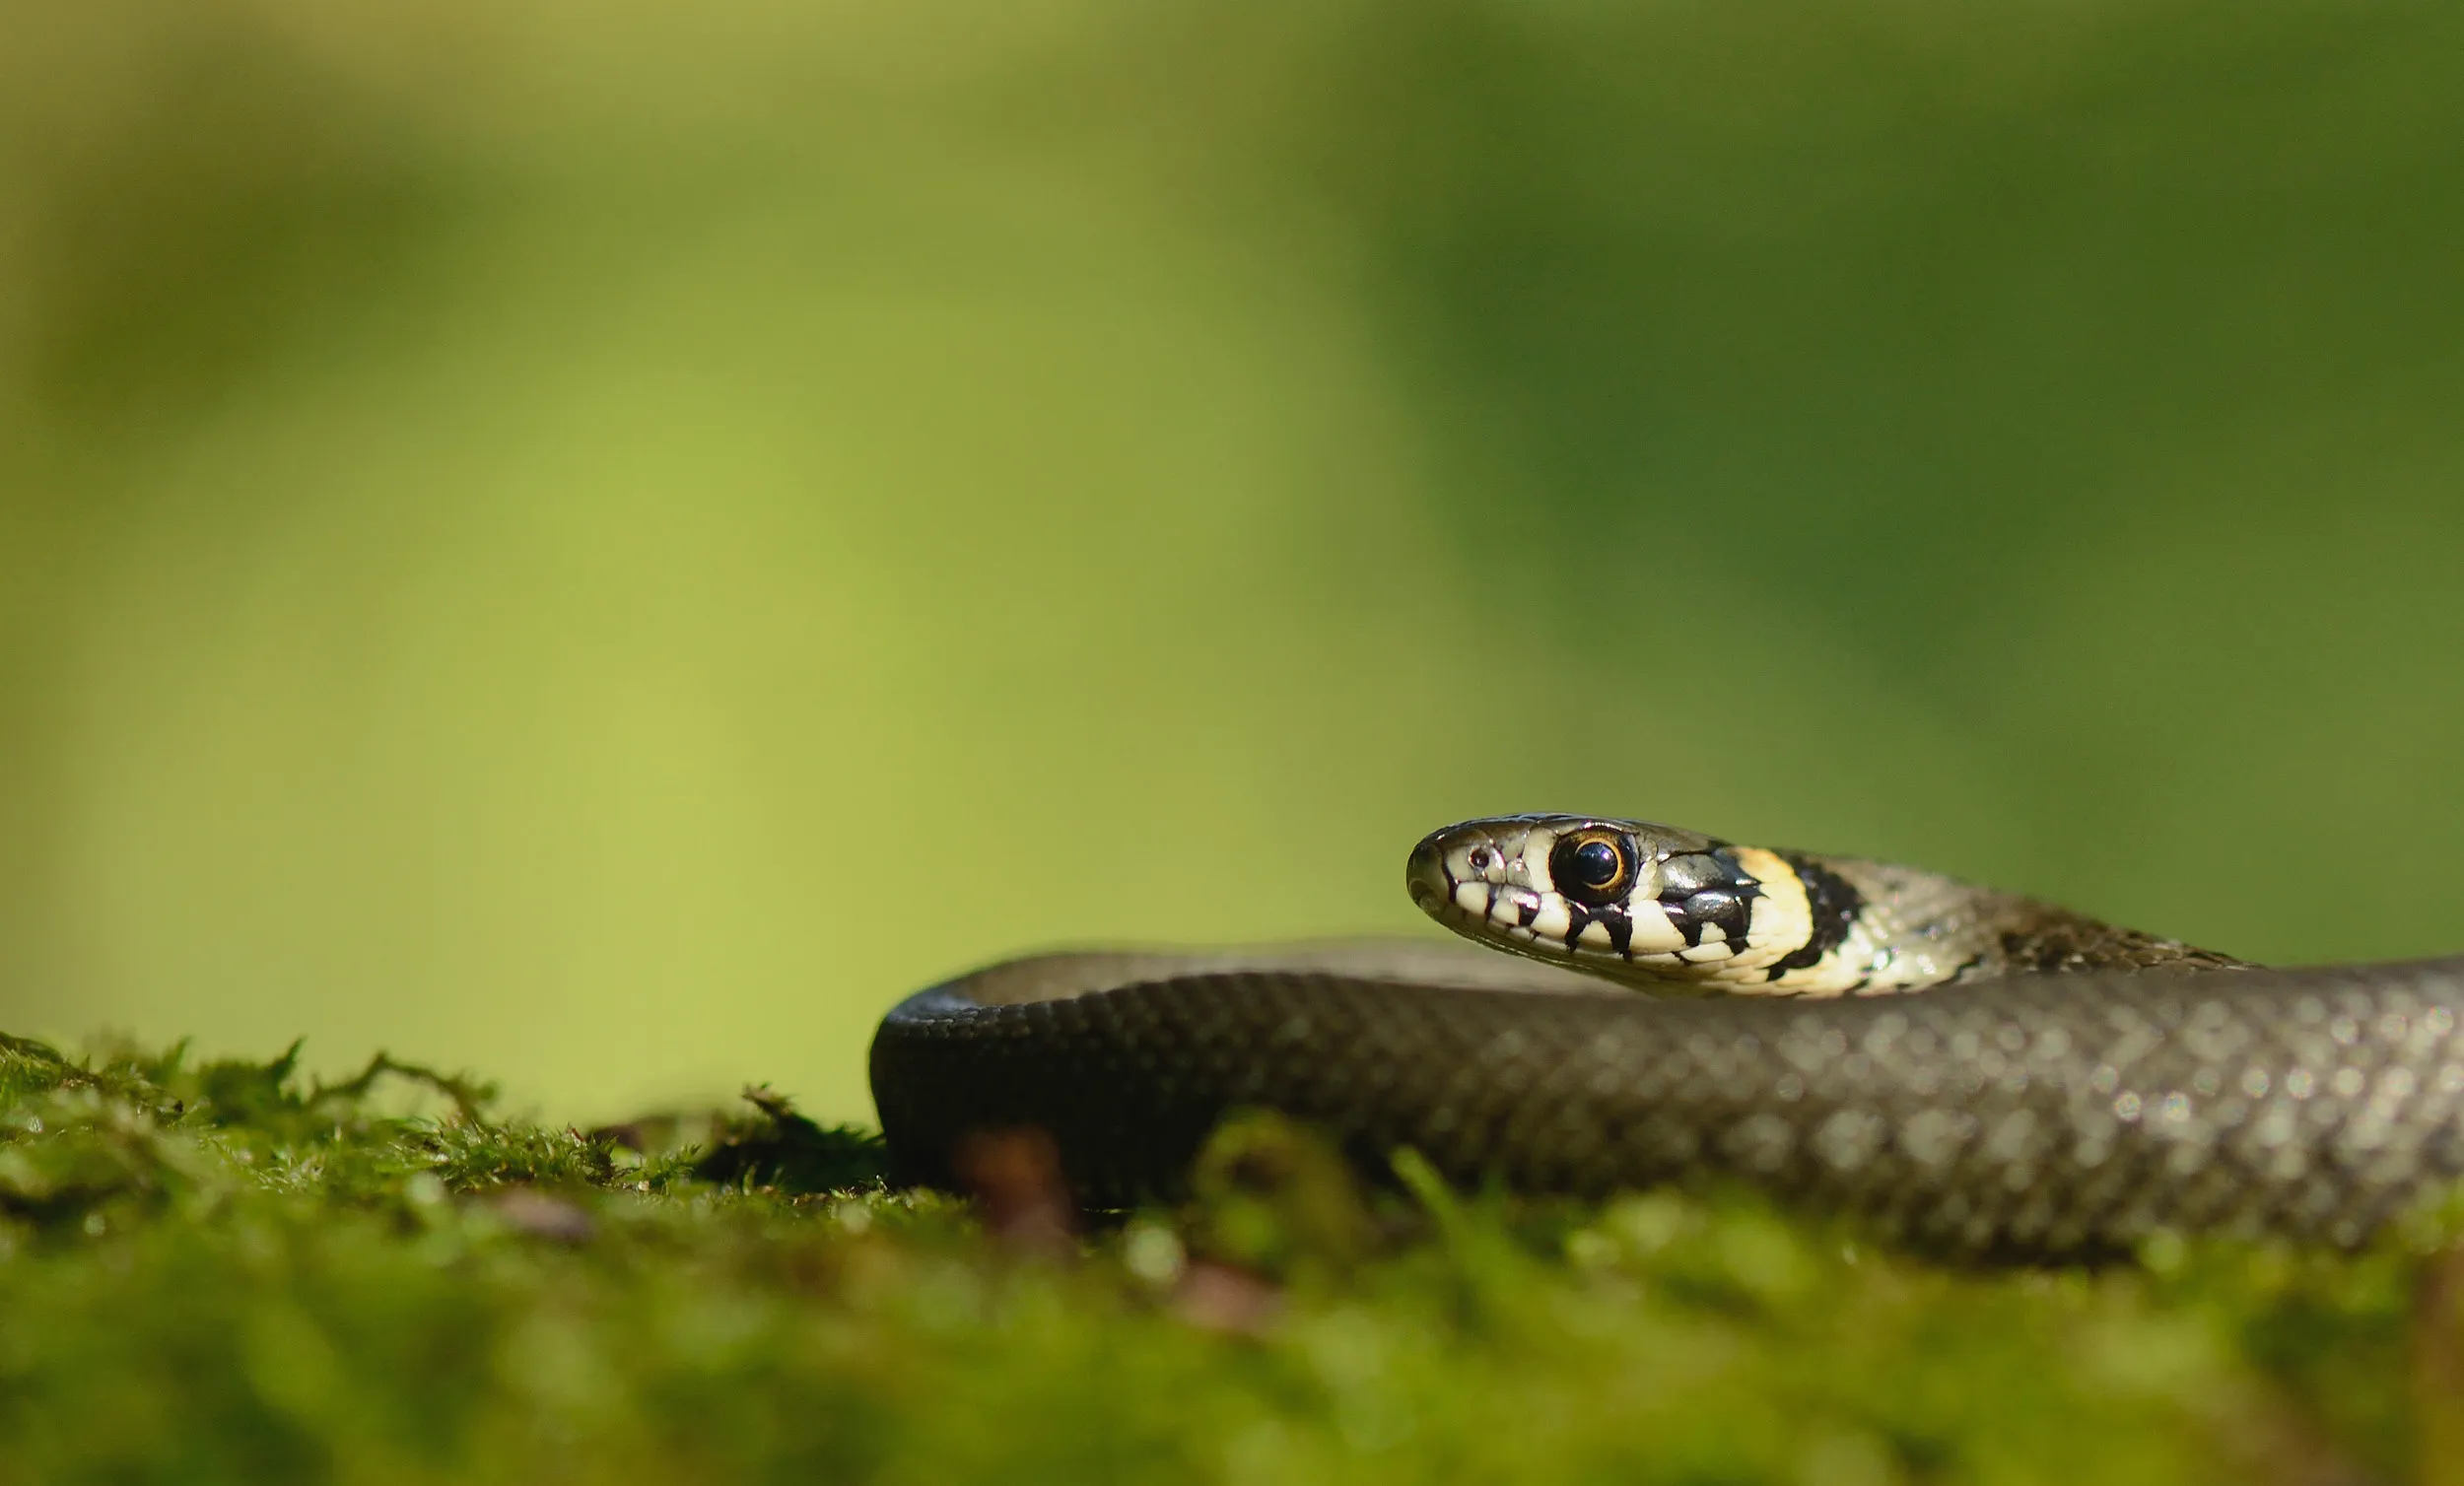 A Grass Snake curled up on short green grass.